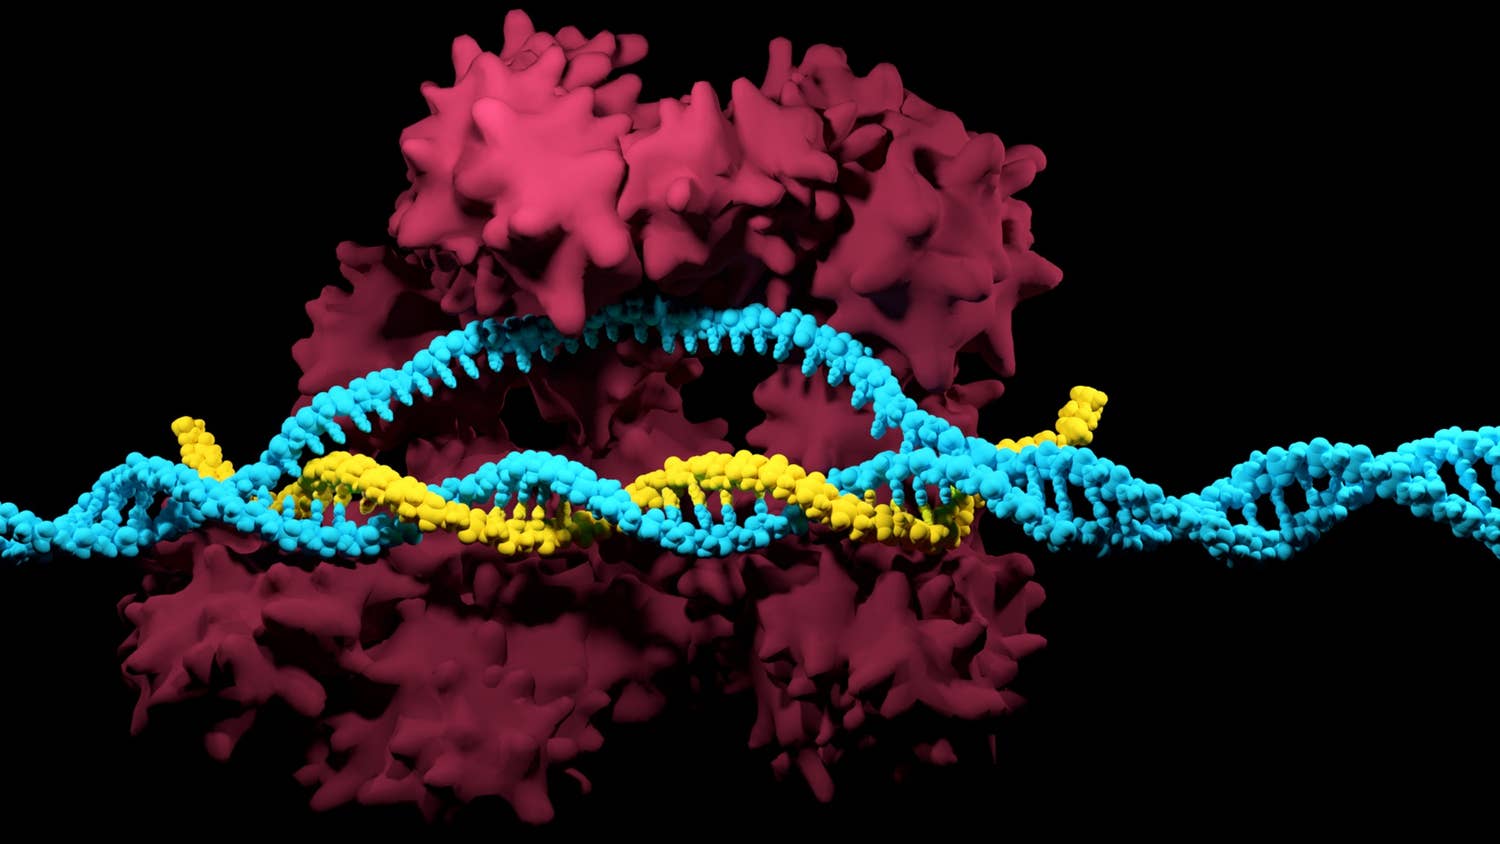 Epigenetics Meets CRISPR/Cas to Fight Cancer